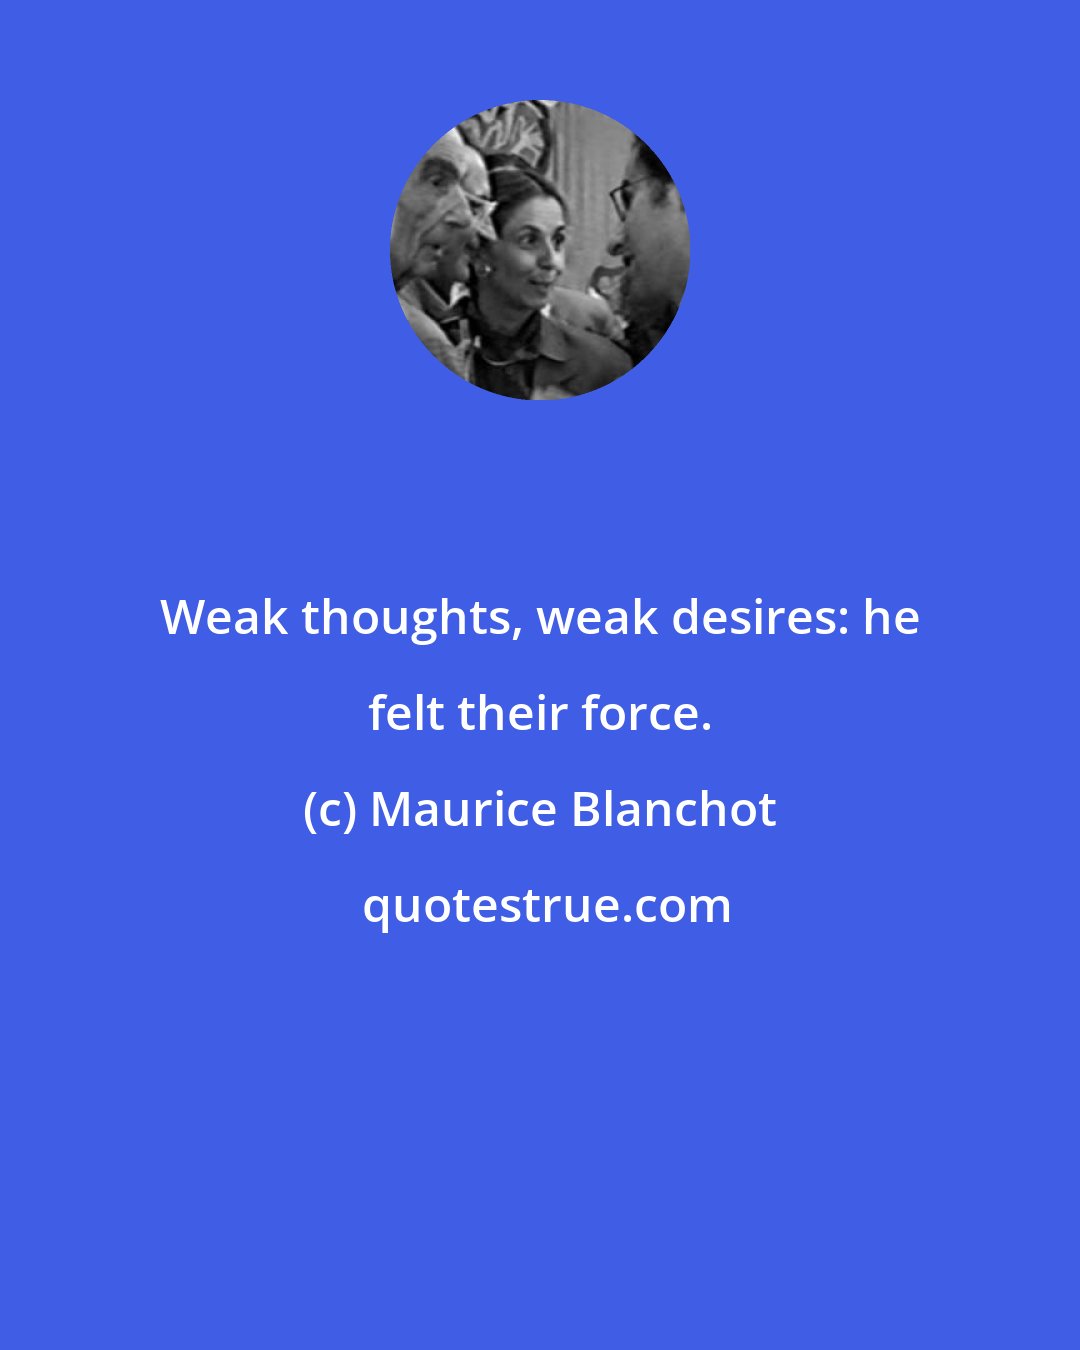 Maurice Blanchot: Weak thoughts, weak desires: he felt their force.